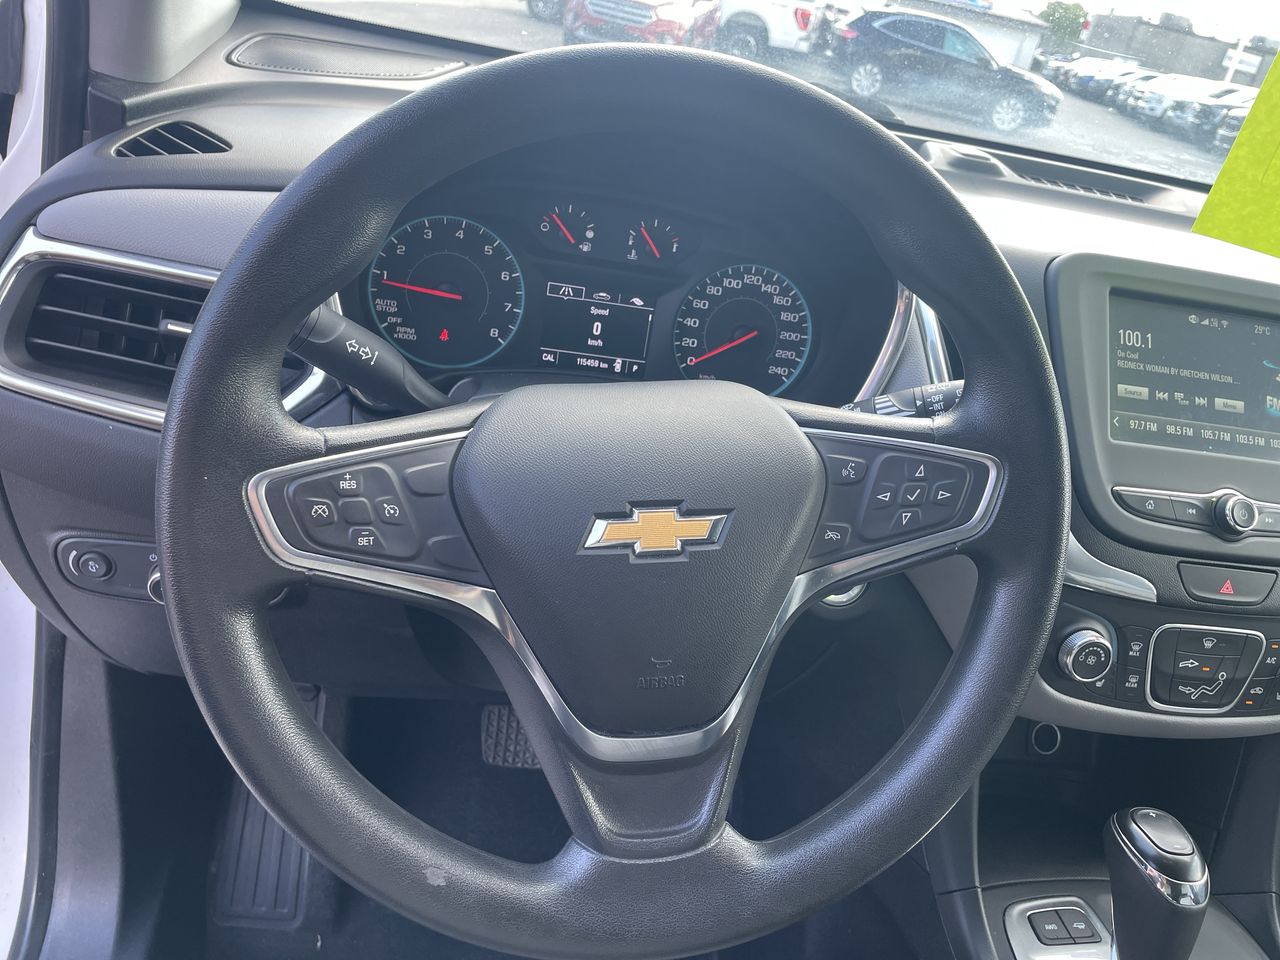 2018 Chevrolet Equinox - P21028 Full Image 14